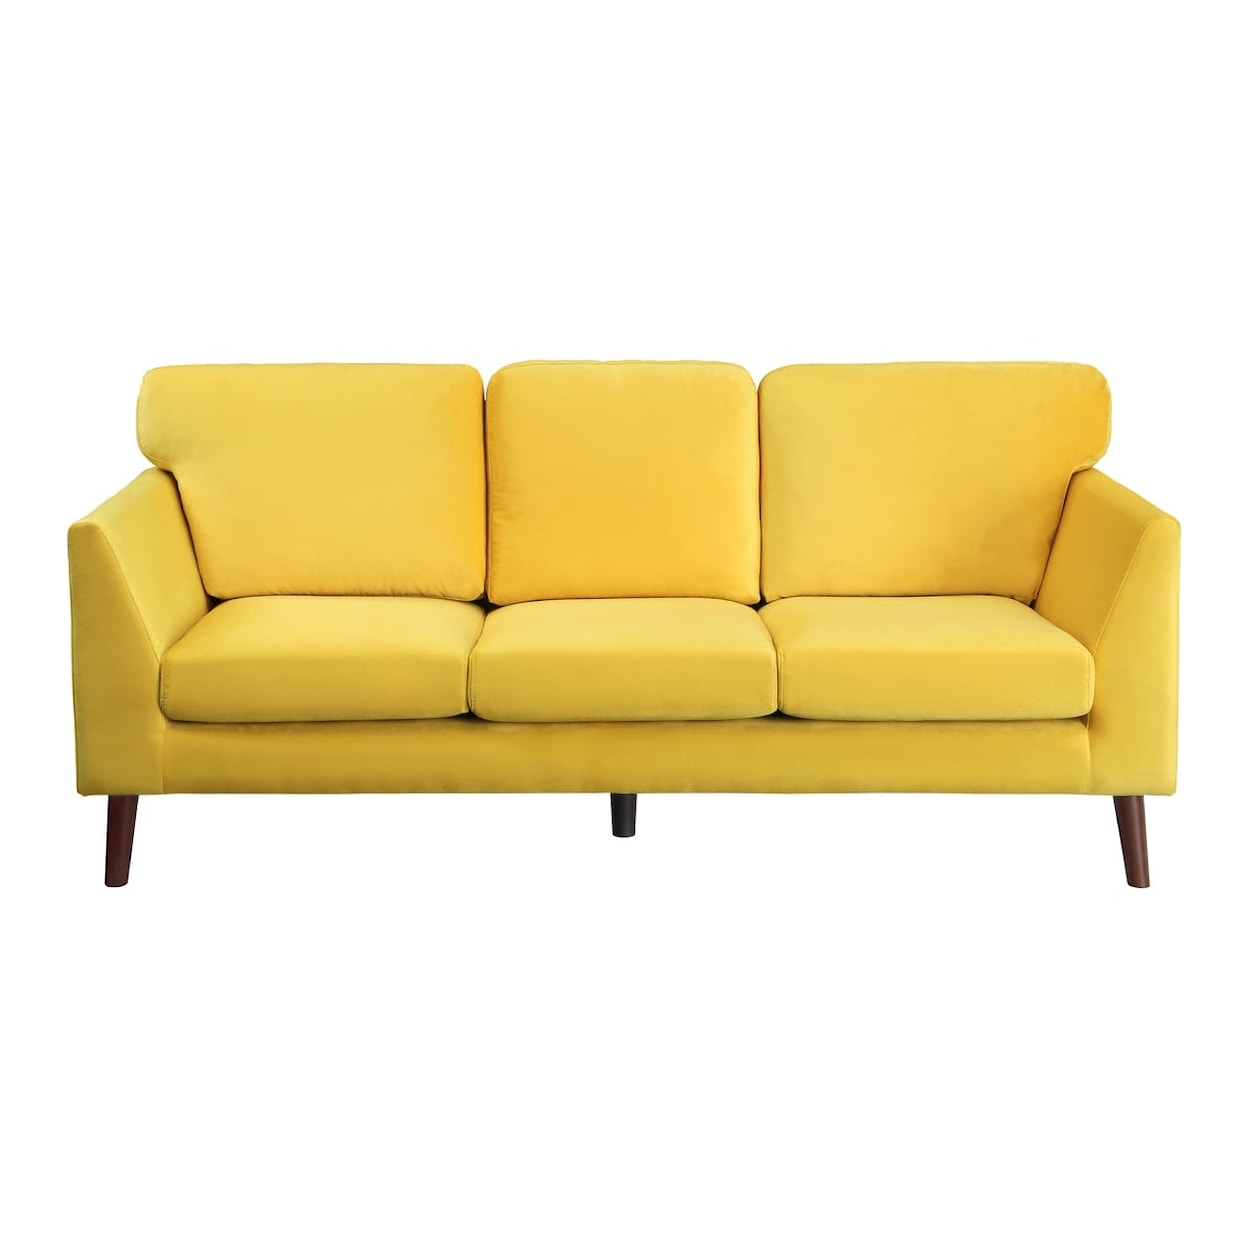 Homelegance Furniture Tolley Stationary Sofa